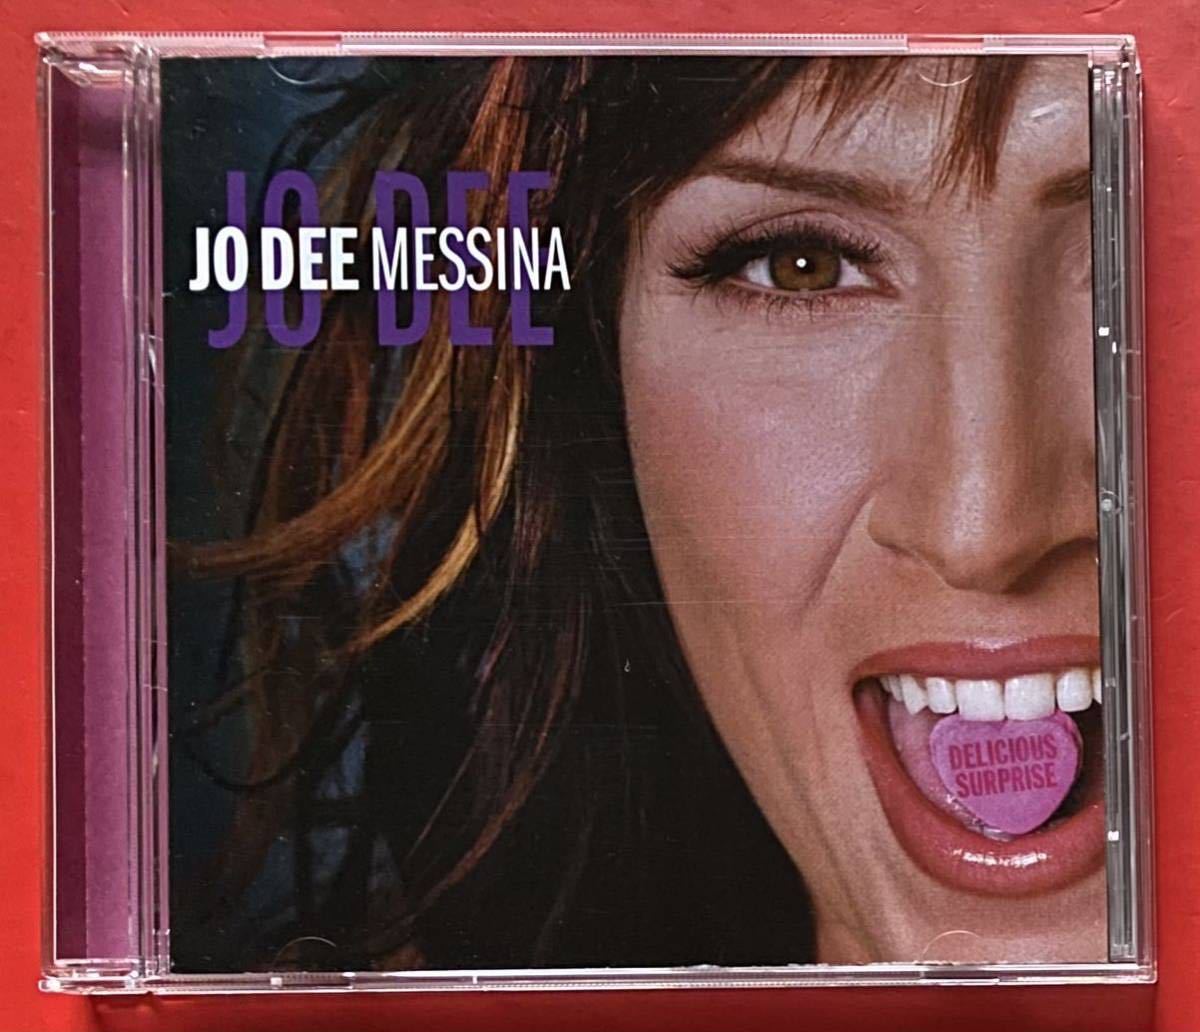 【CD】JO DEE MESSINA「DELICIOUS SURPRISE」ジョー・ディー・メッシーナ 輸入盤 盤面良好 [07210324]_画像1